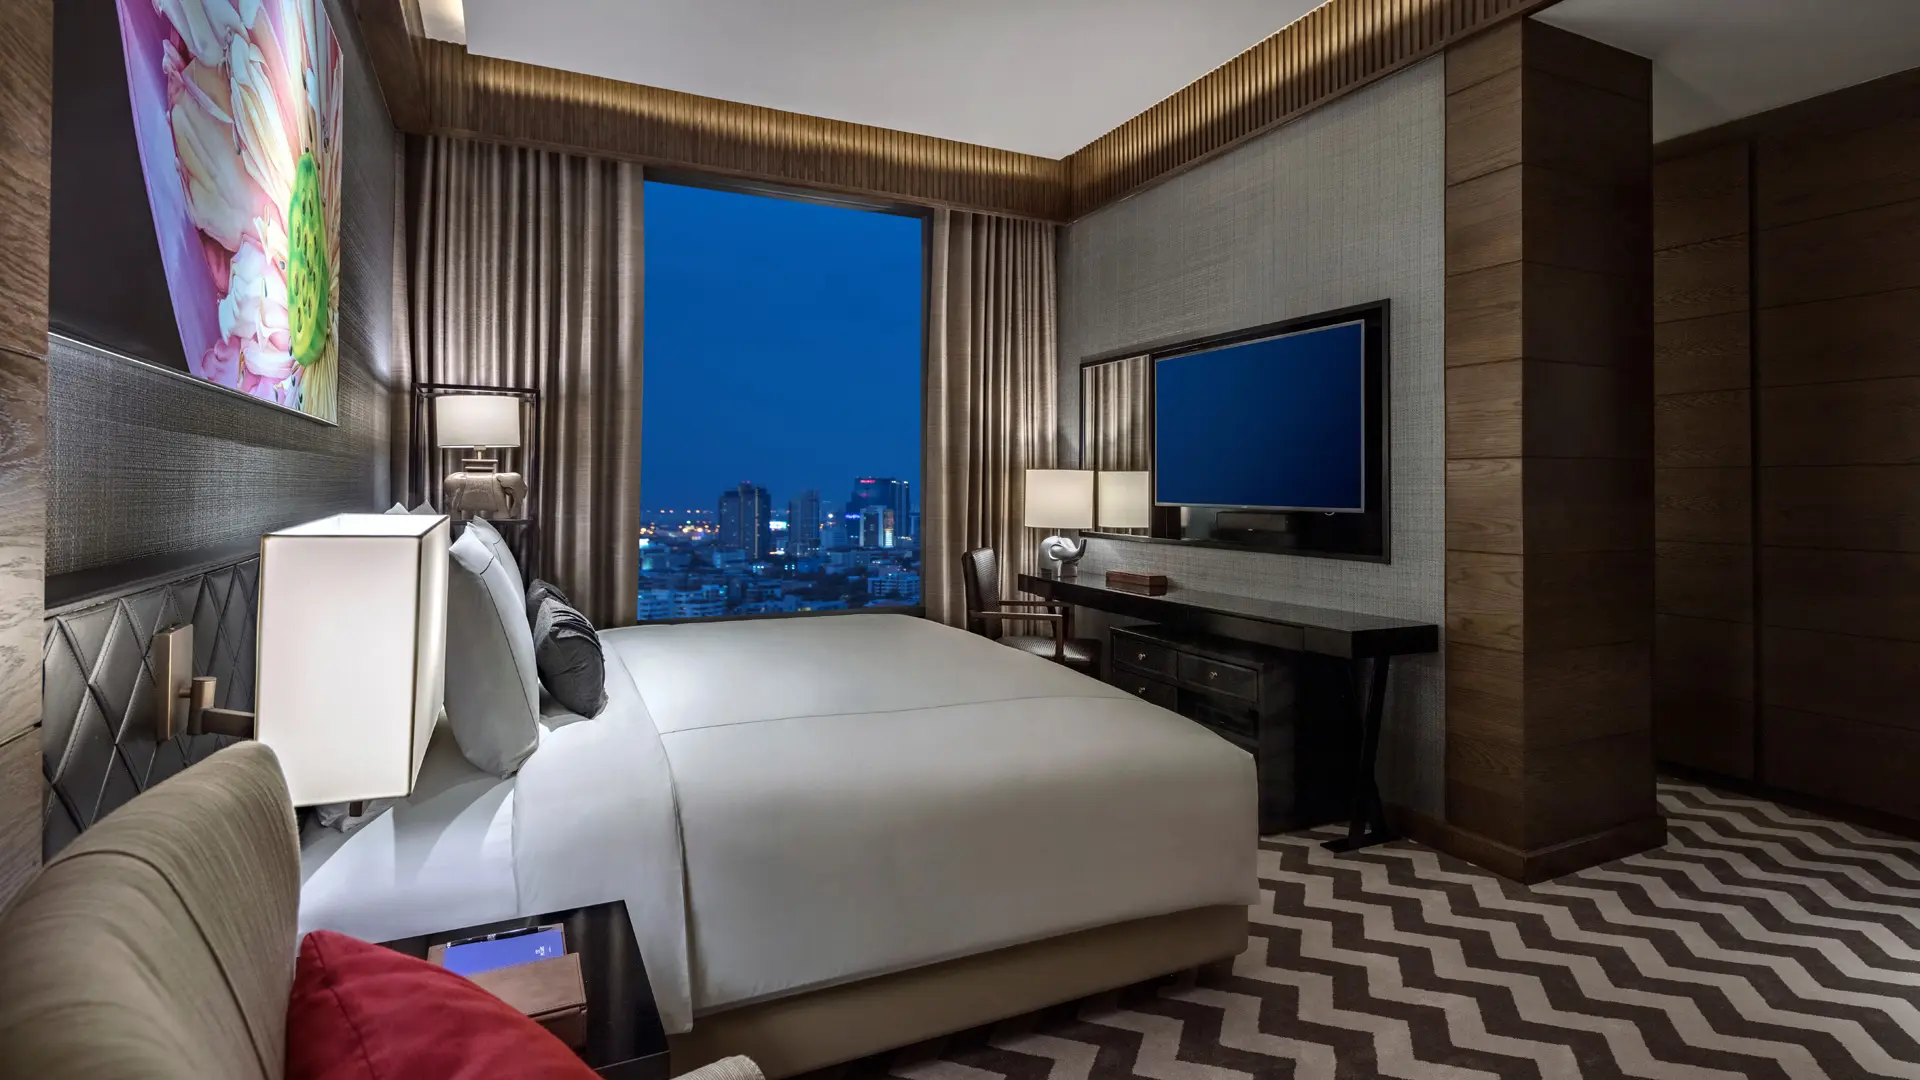 Hotel review Accommodation' - 137 Pillars Suites Bangkok - 4